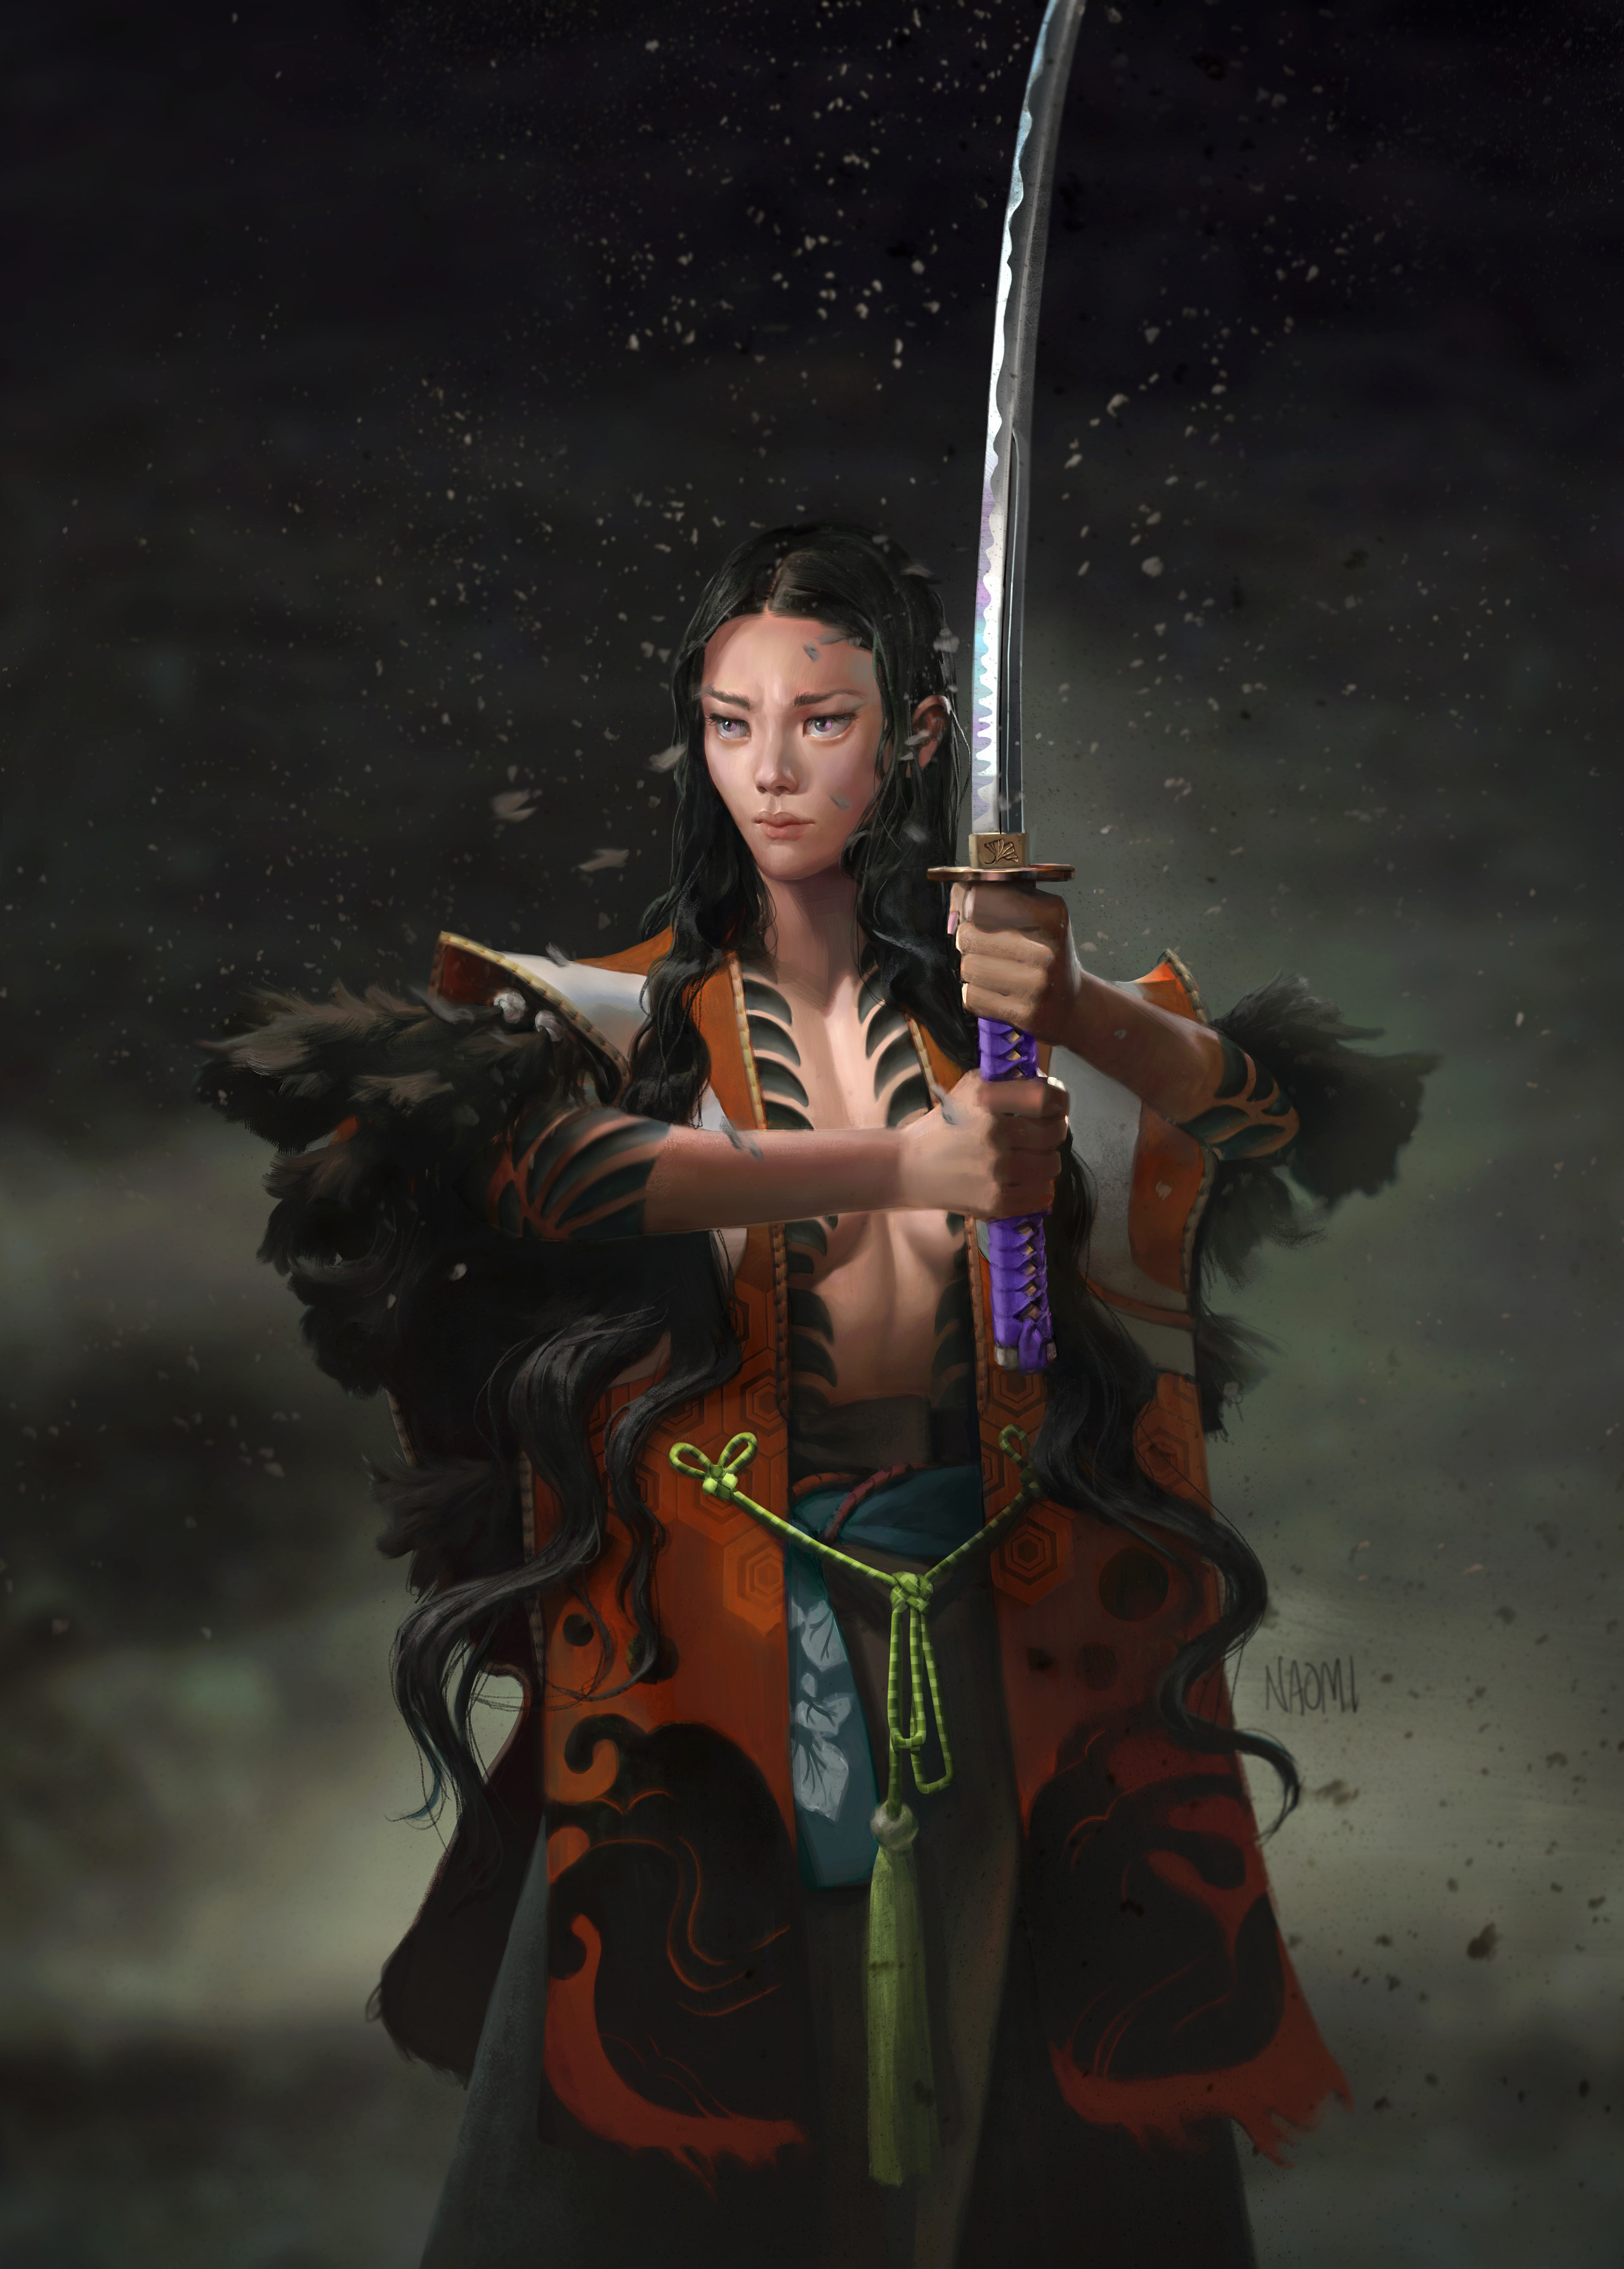 General 2560x3577 Naomi Baker artwork women fantasy art fantasy girl sword weapon women with swords